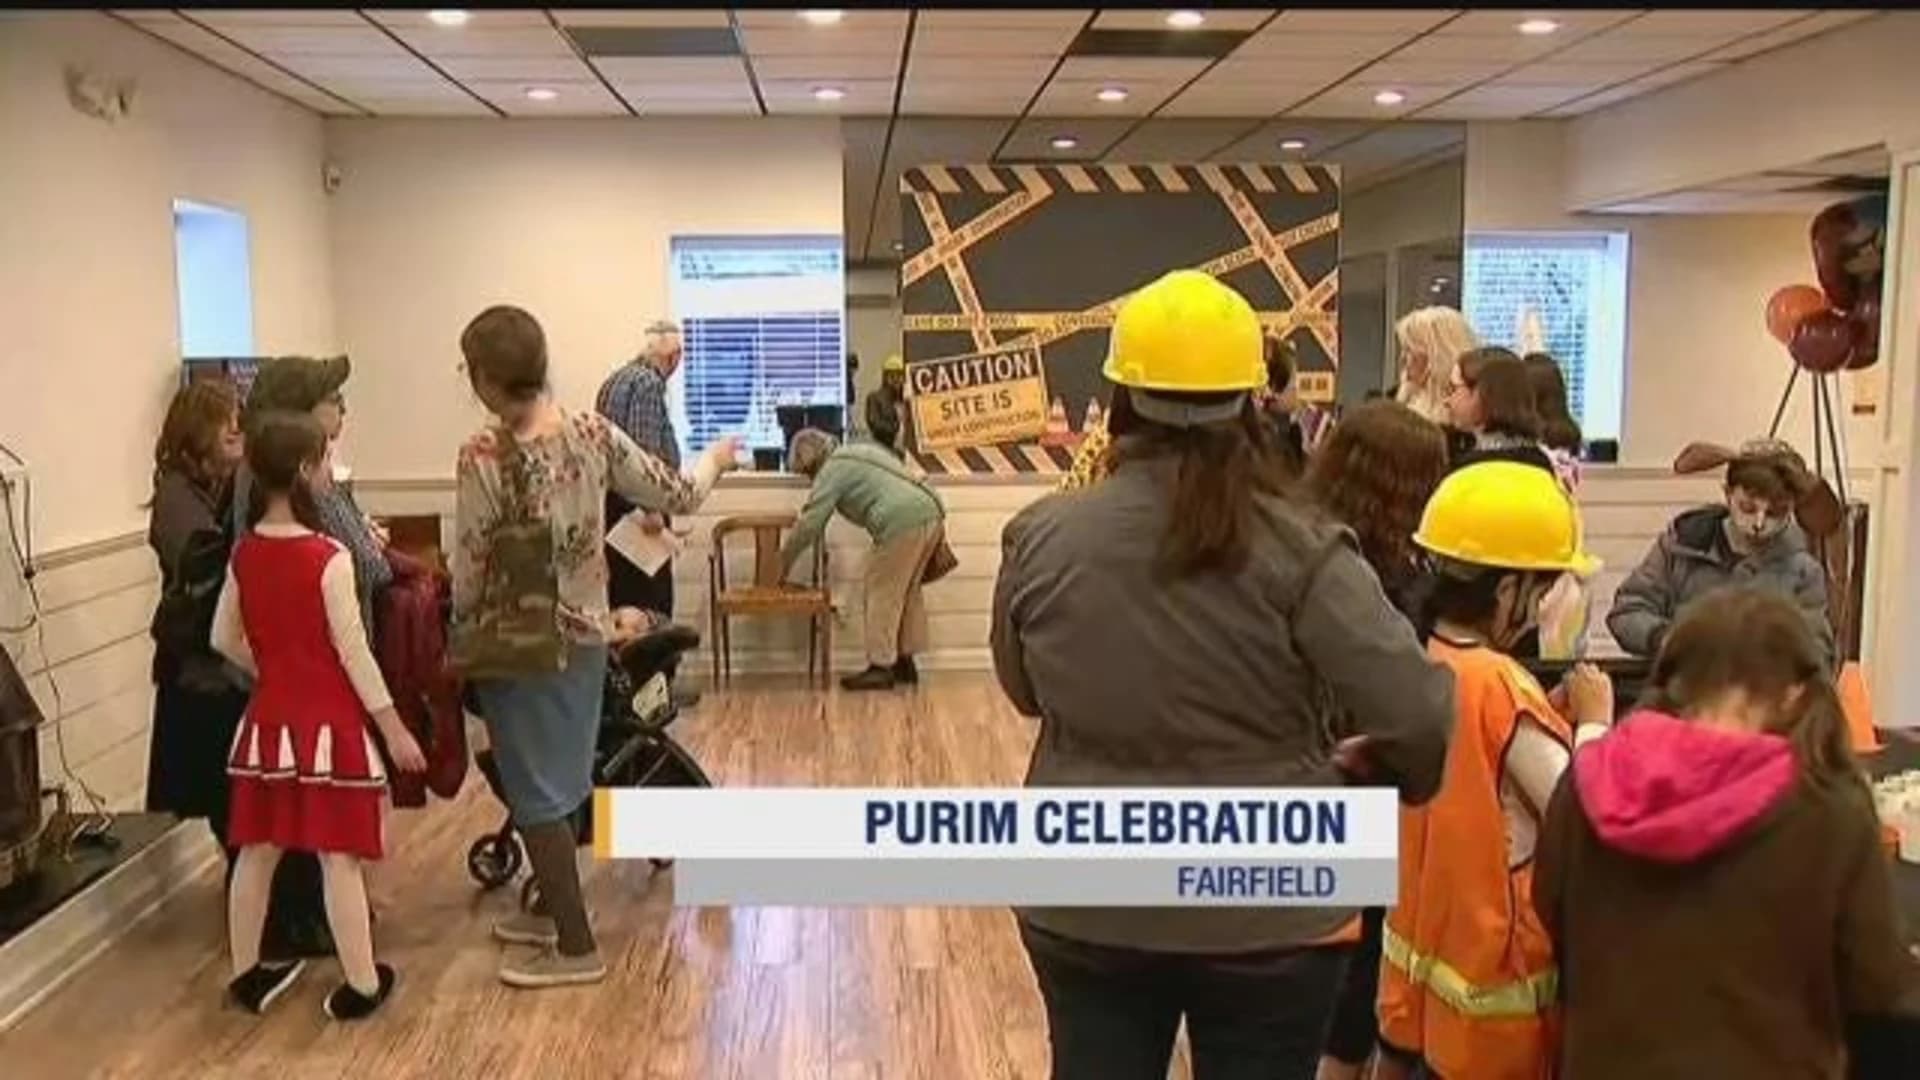 Jewish families celebrate Purim in Fairfield